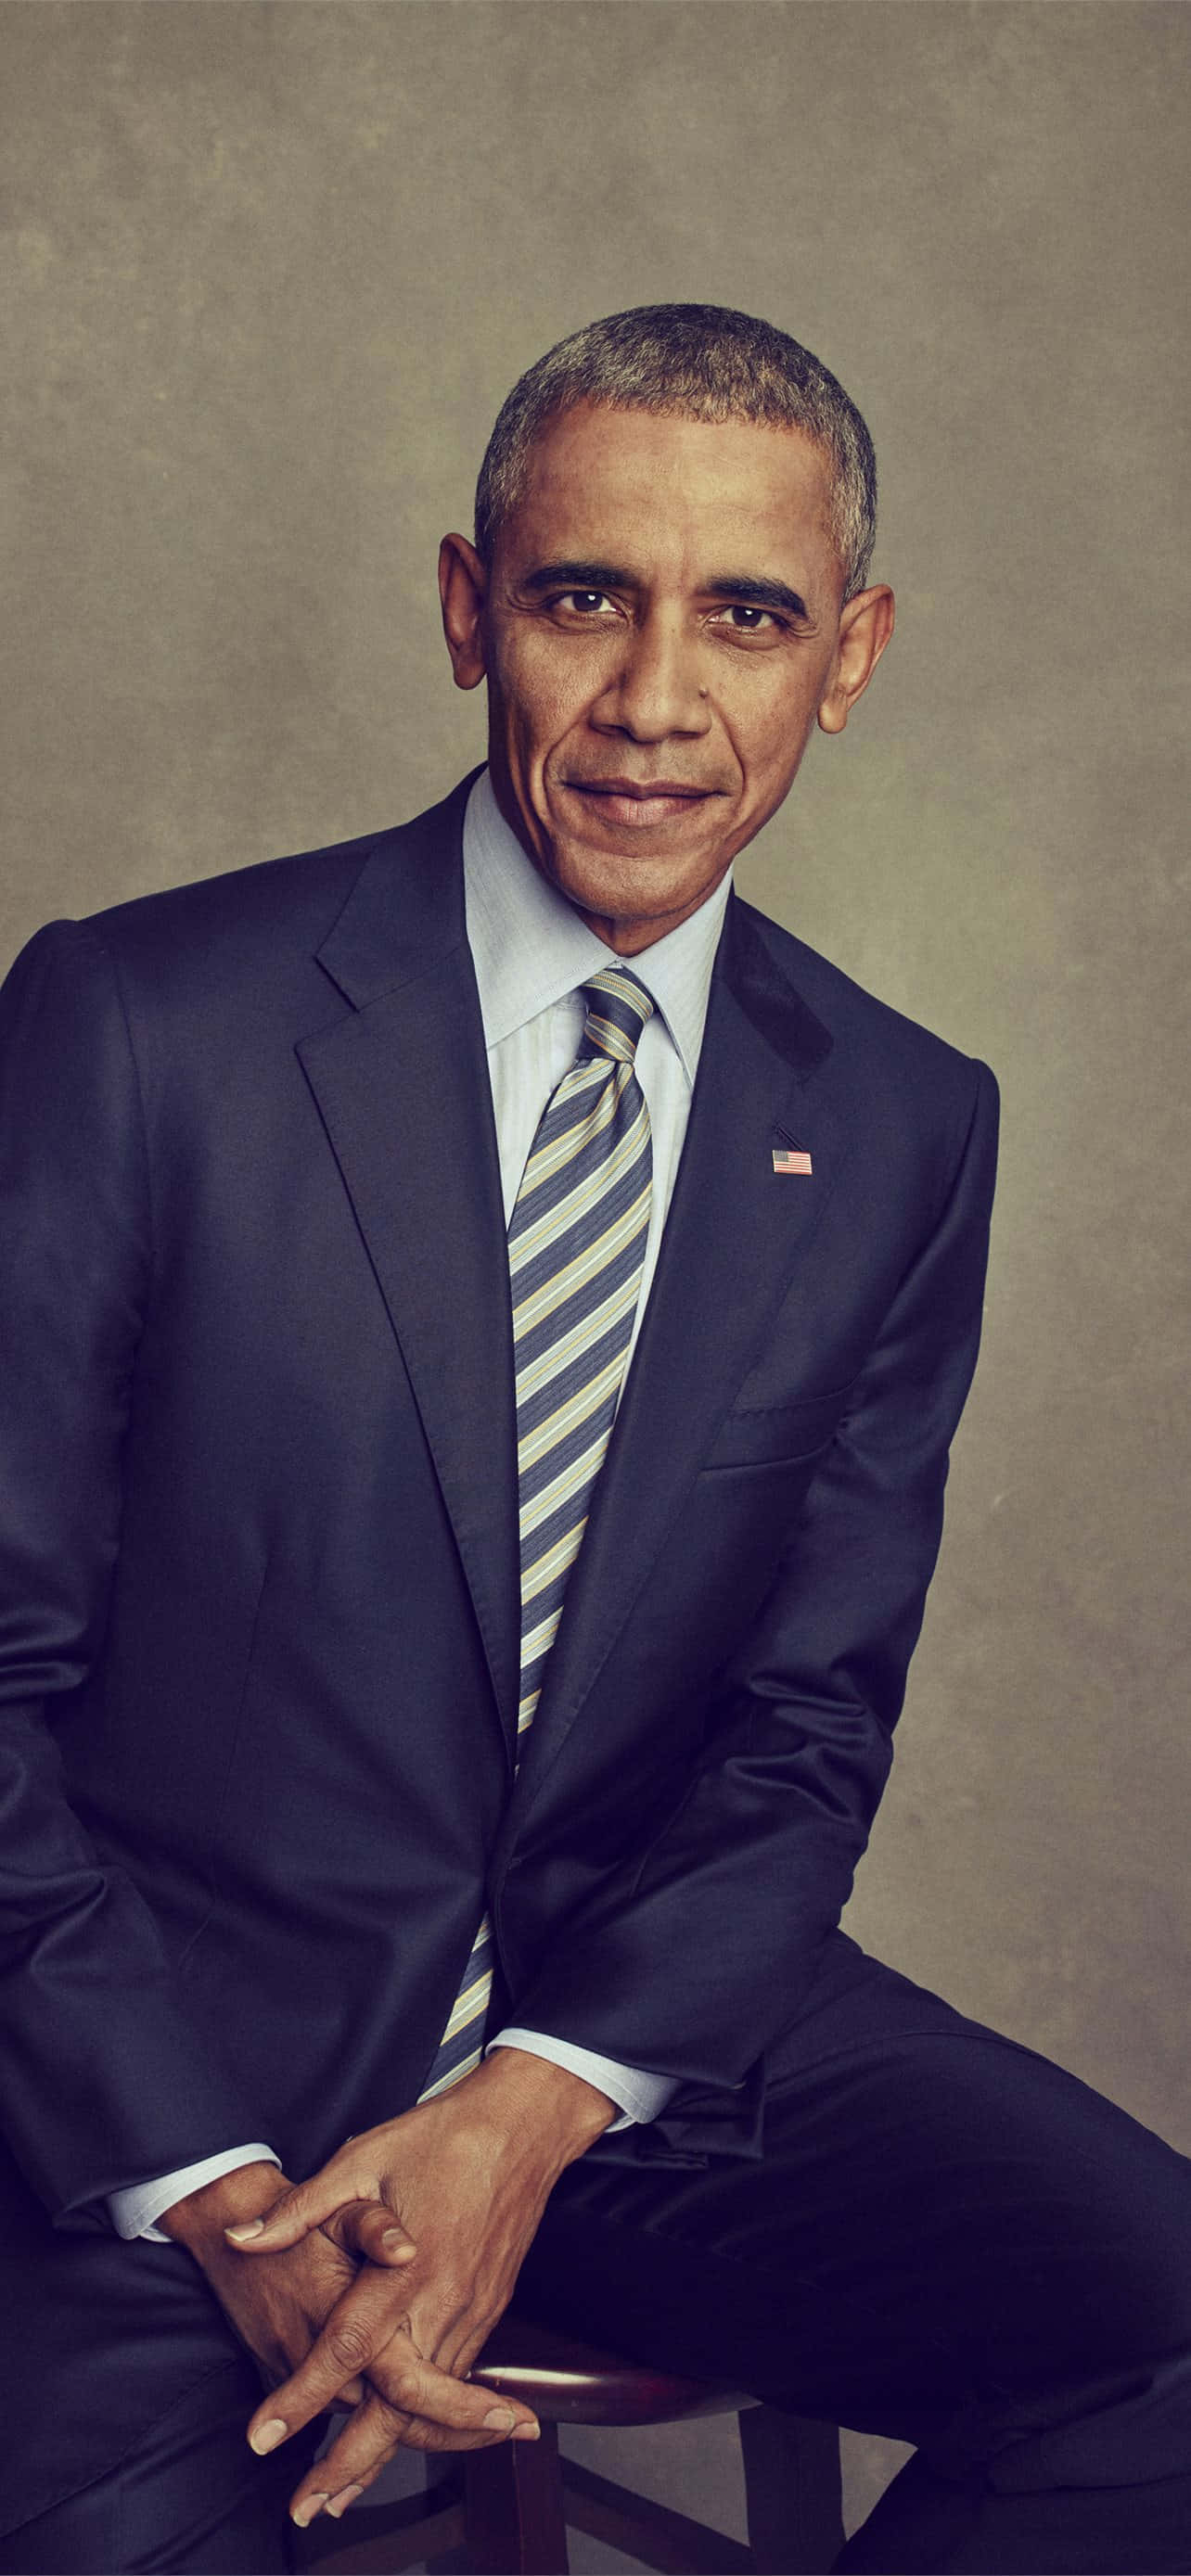 Former President Barack Obama smiles during an event